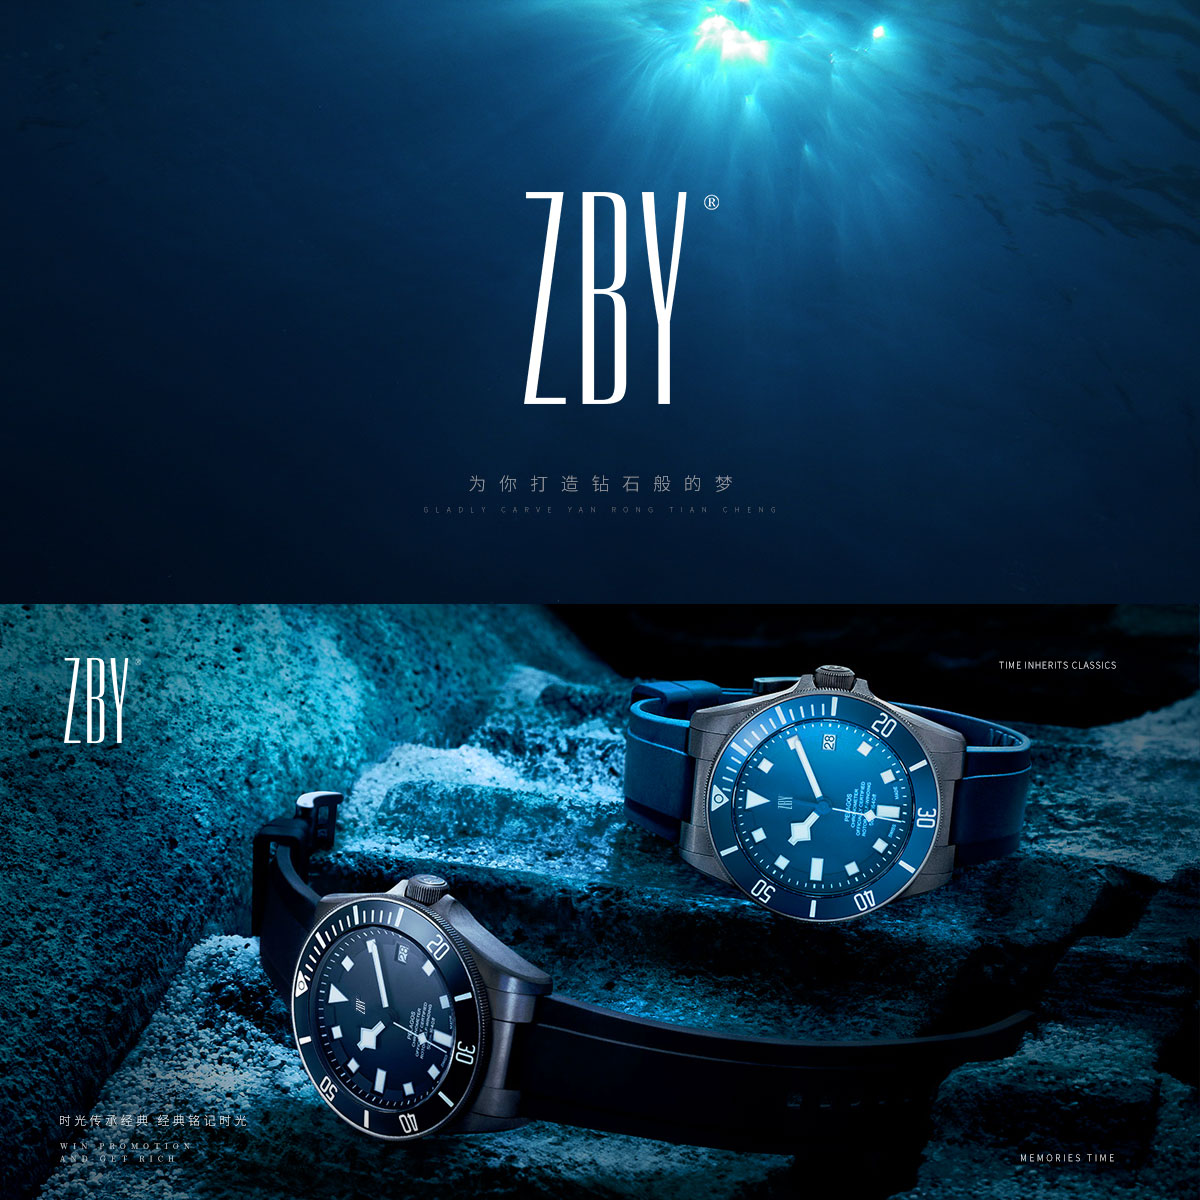 ZBY商标转让 - 第14珠宝钟表